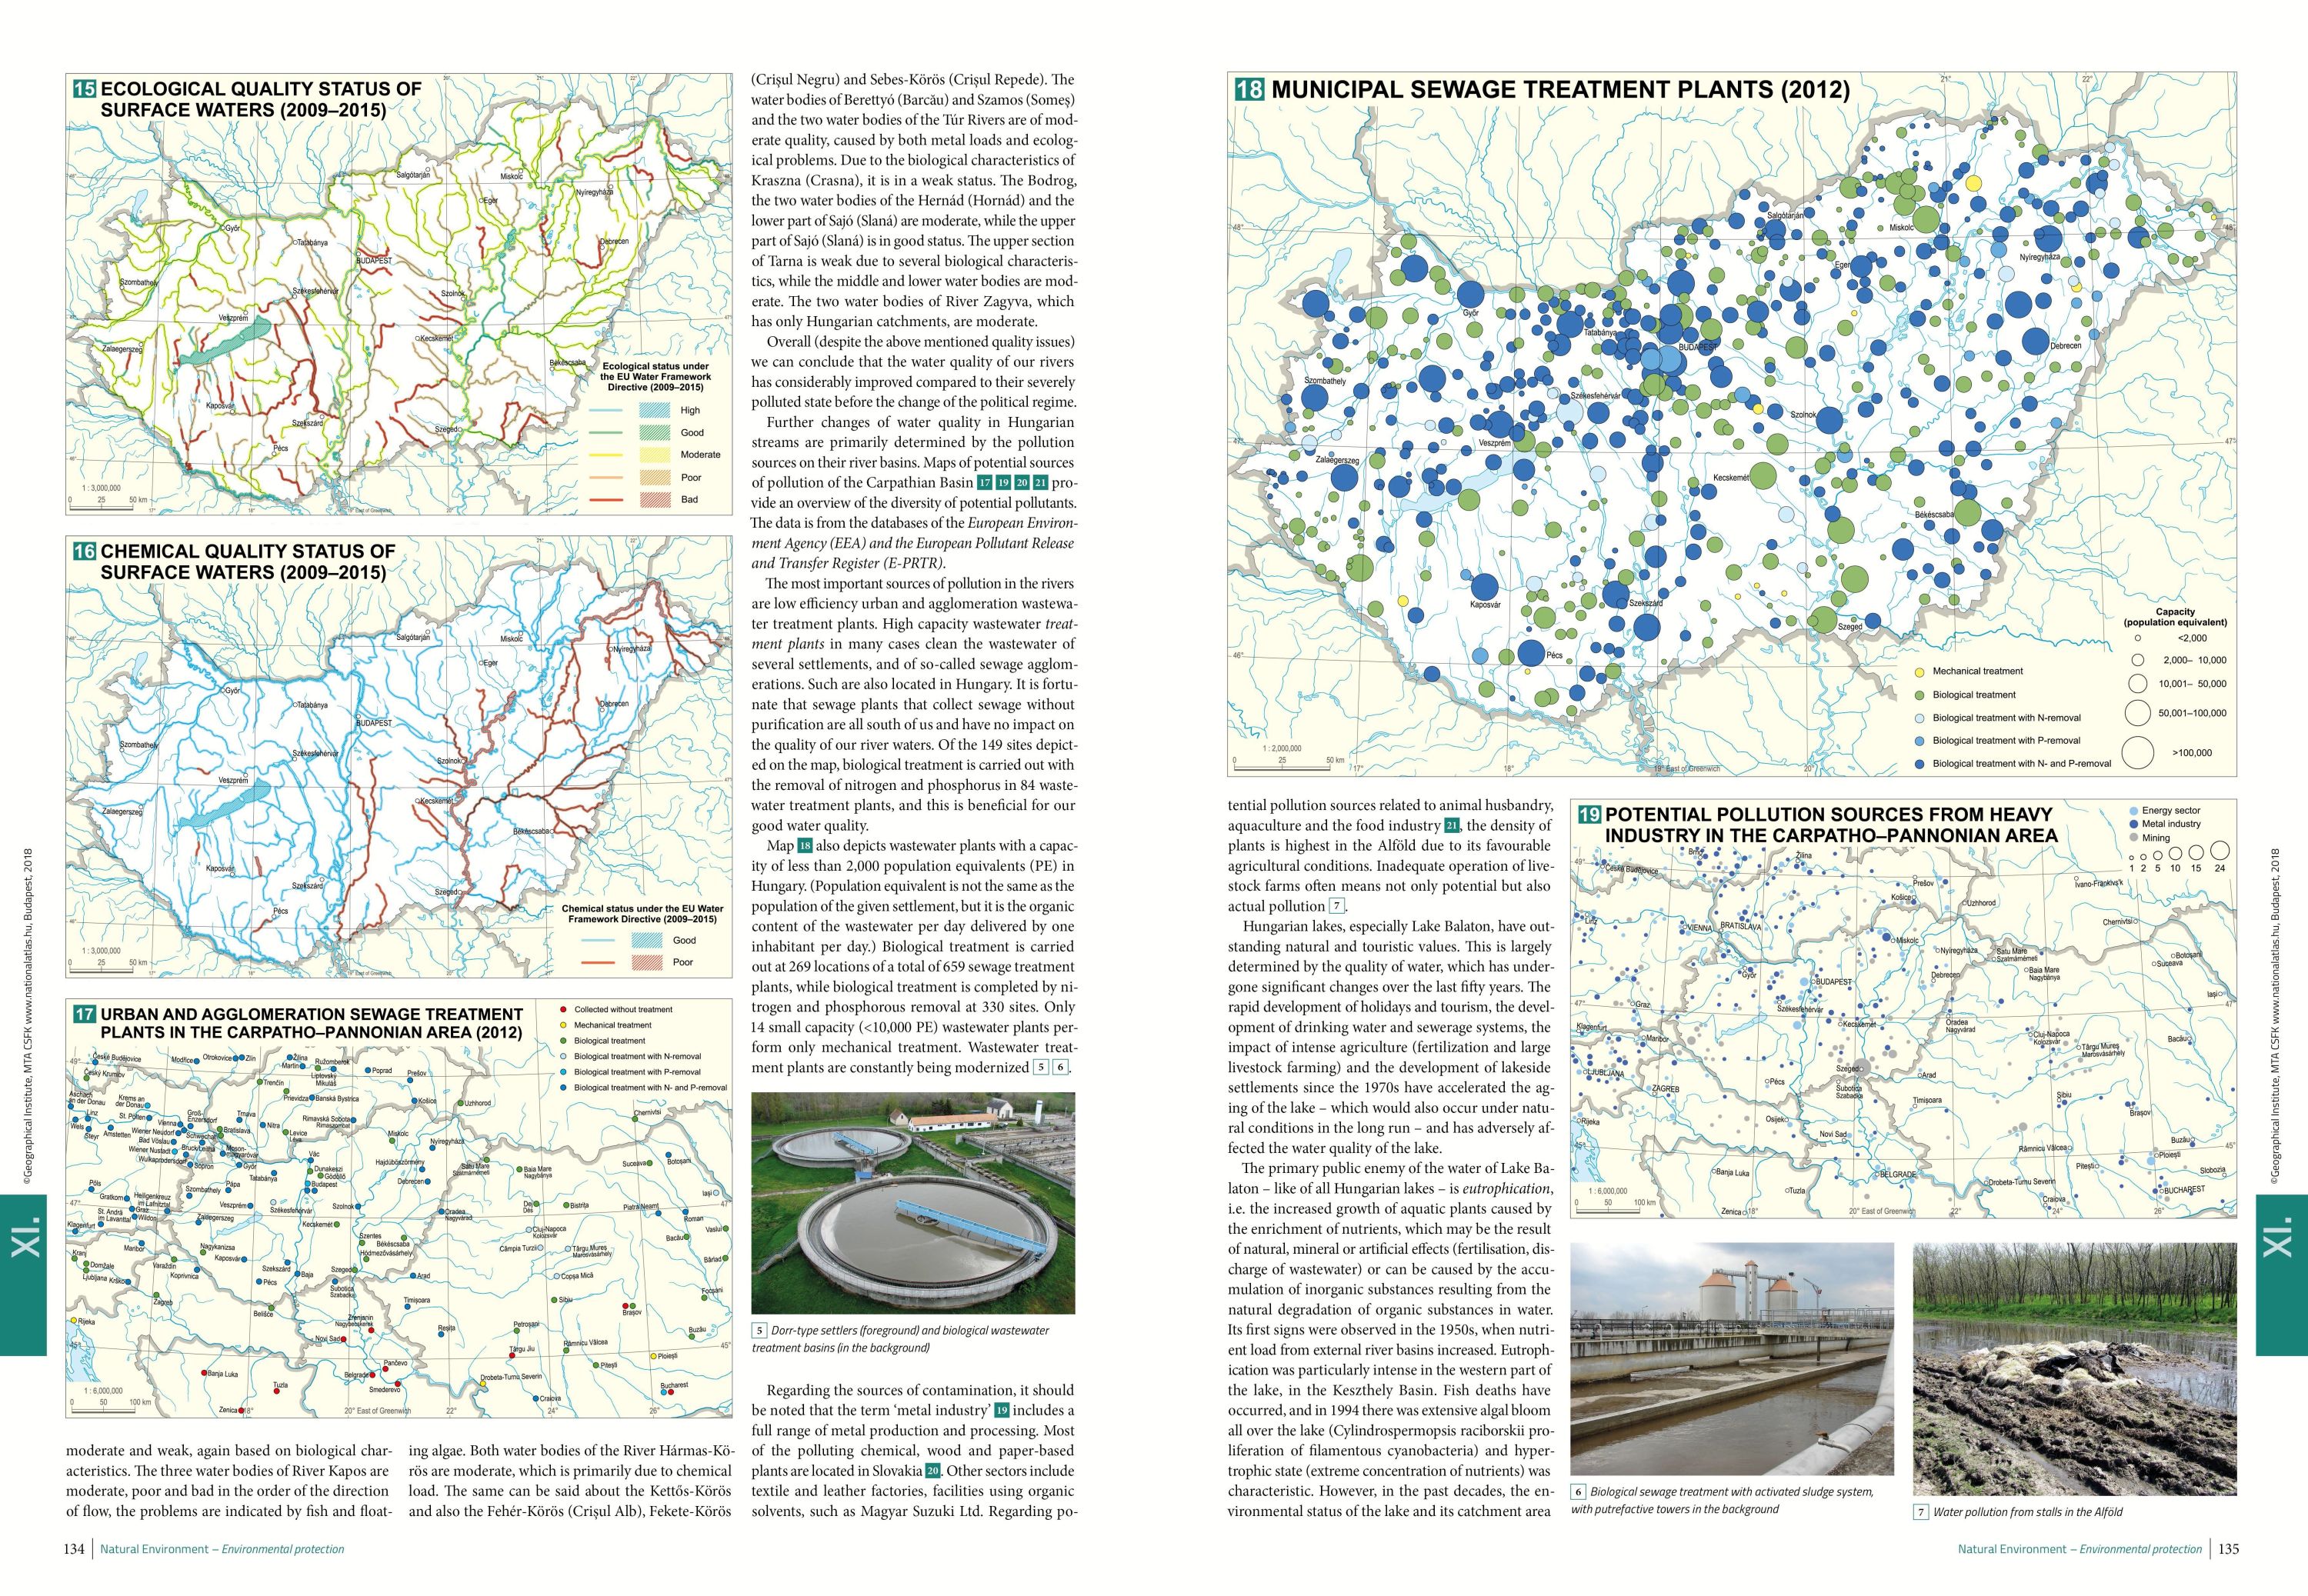 National Atlas of Hungary Vol. 2: sample environment